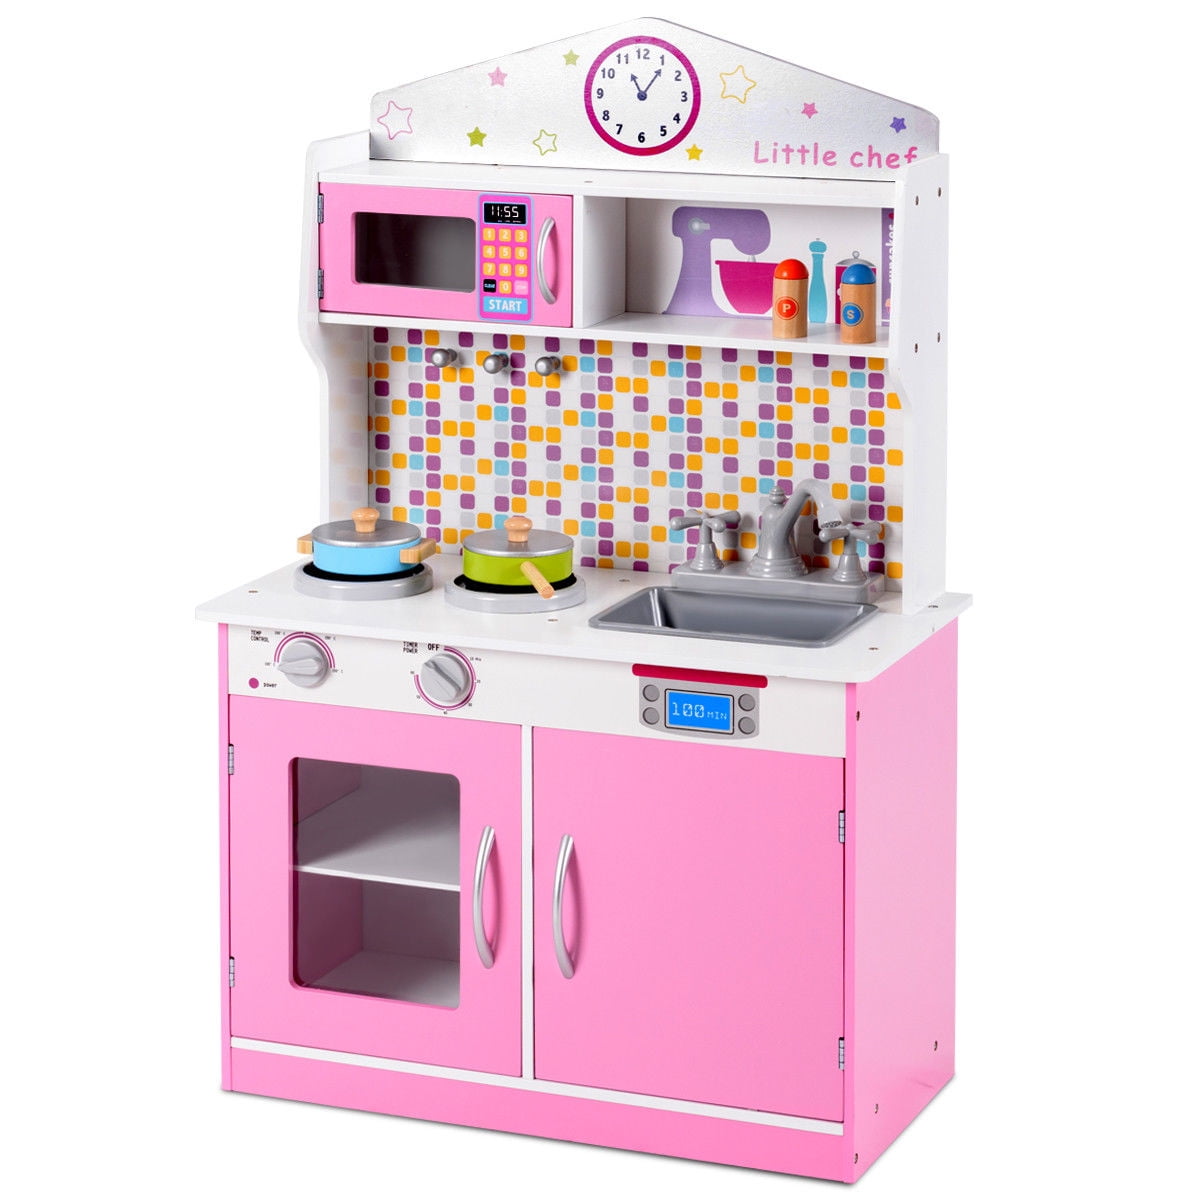 Kitchen Toy Set Walmart on Sale, 57% OFF | www.gruposincom.es